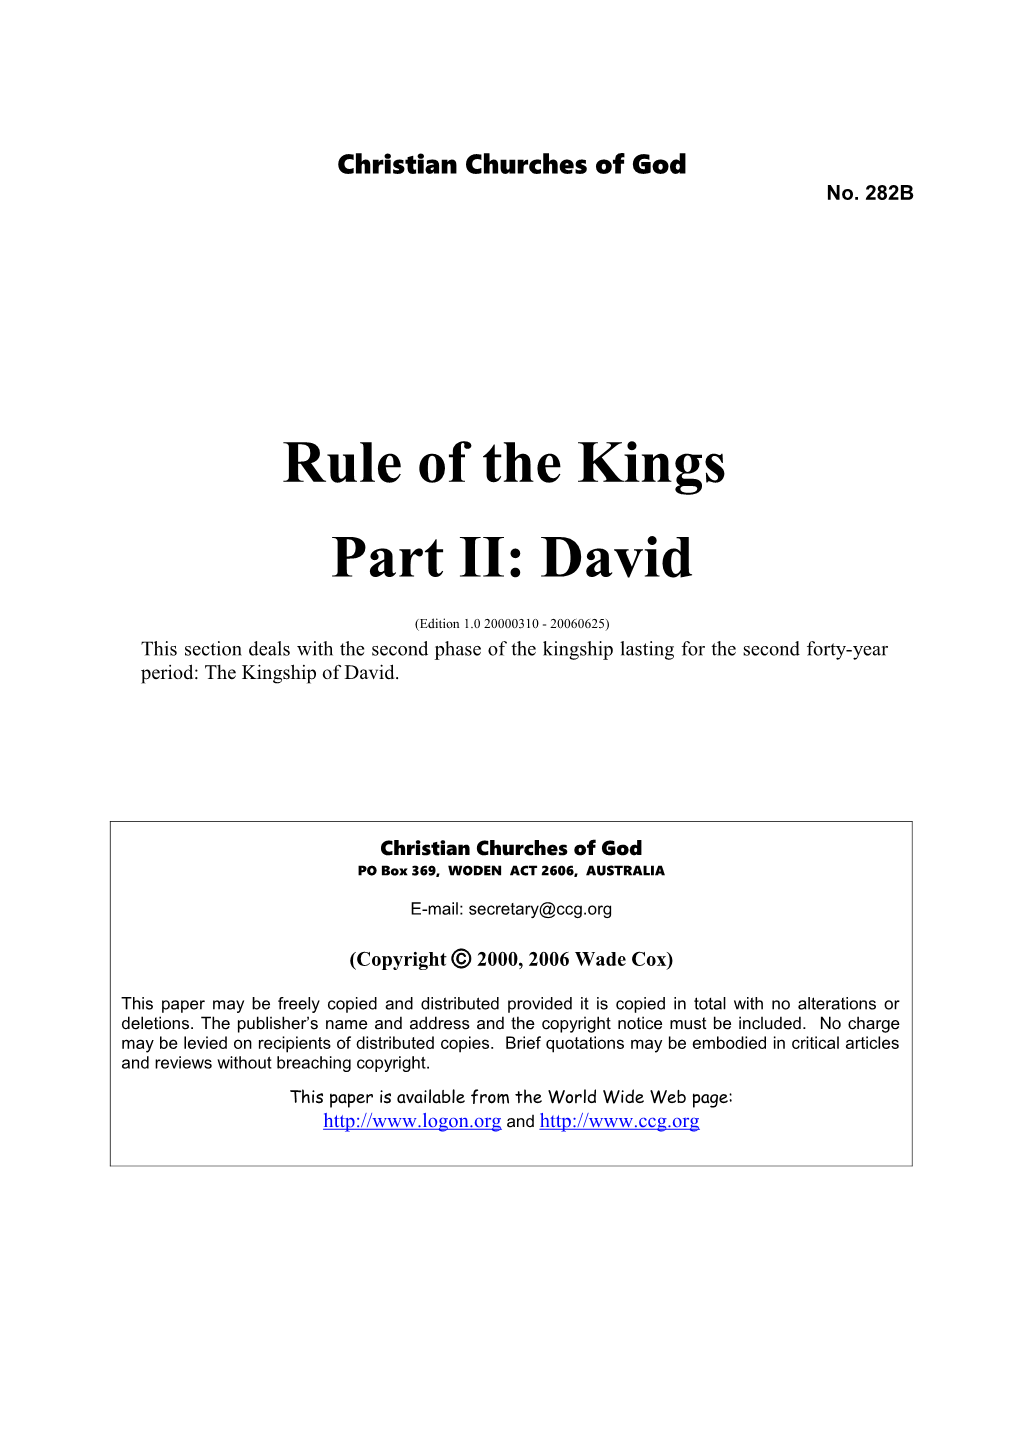 Rule of the Kings Part II: David (No. 282B)